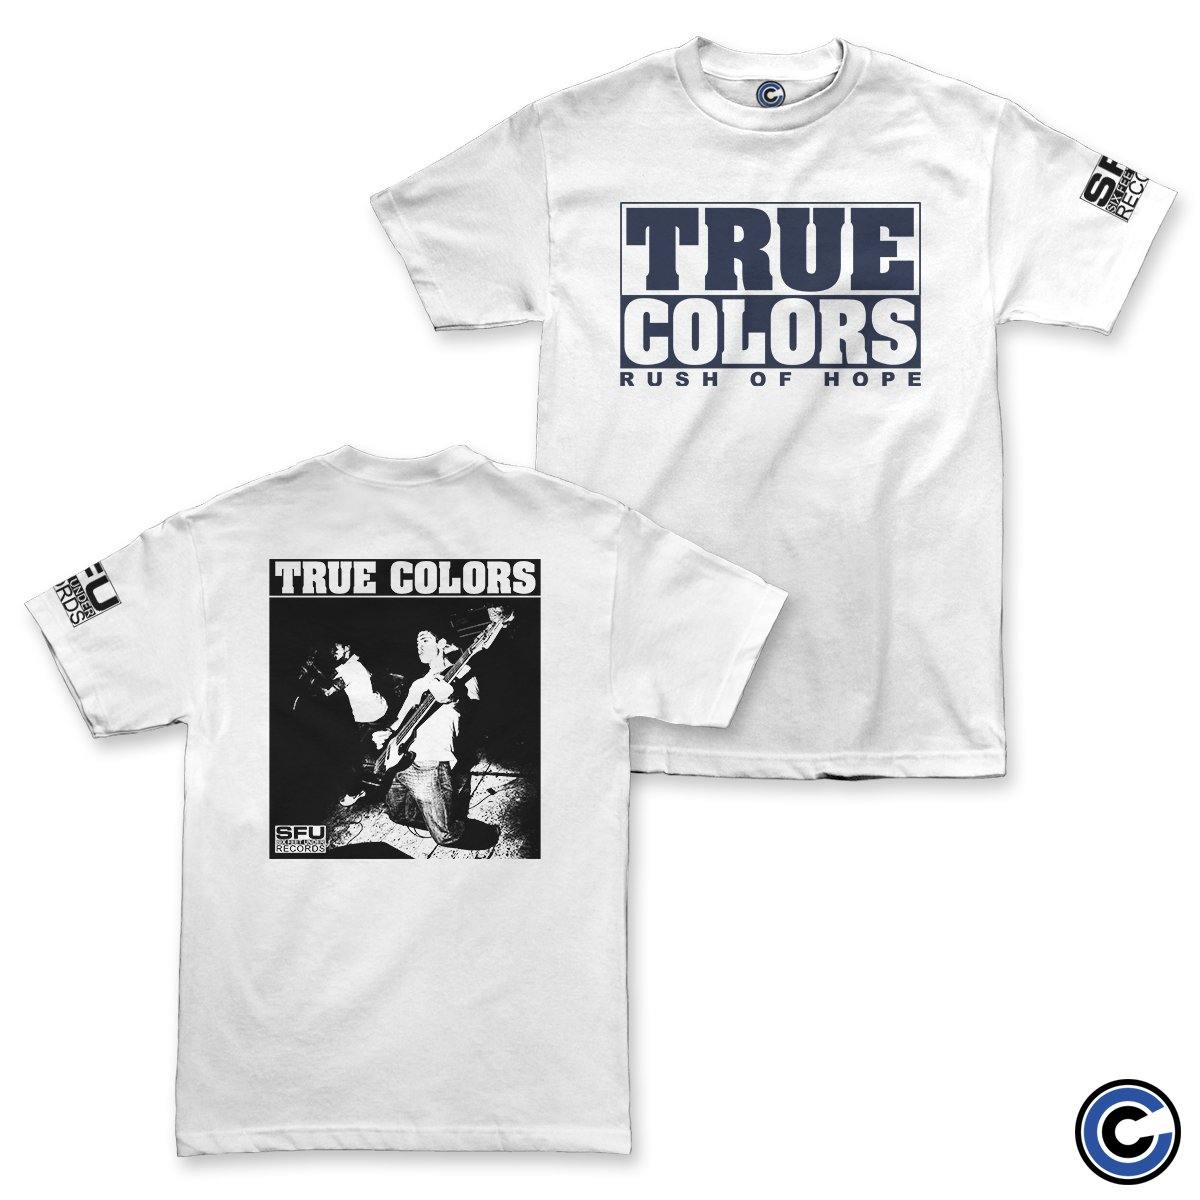 Buy – True Colors "Rush of Hope" Shirt – Band & Music Merch – Cold Cuts Merch